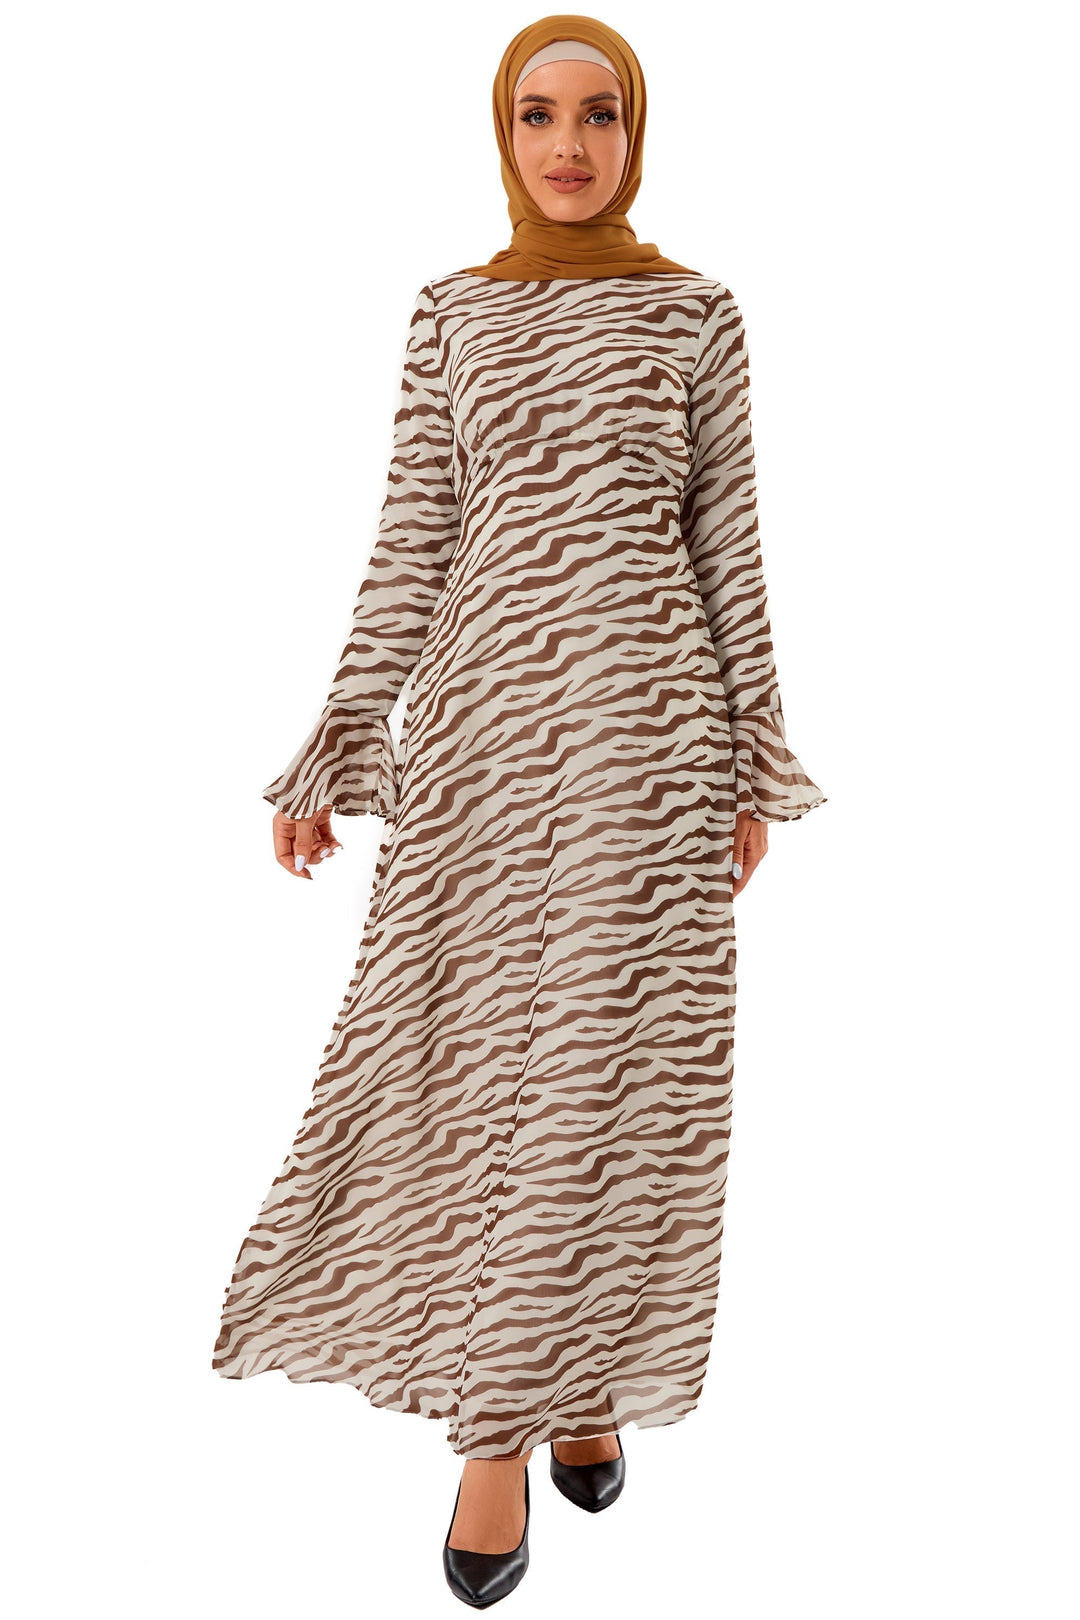 Urban Modesty - Zebra Print Chiffon Long Sleeve Maxi Dress (More Color Available)-CLEARANCE